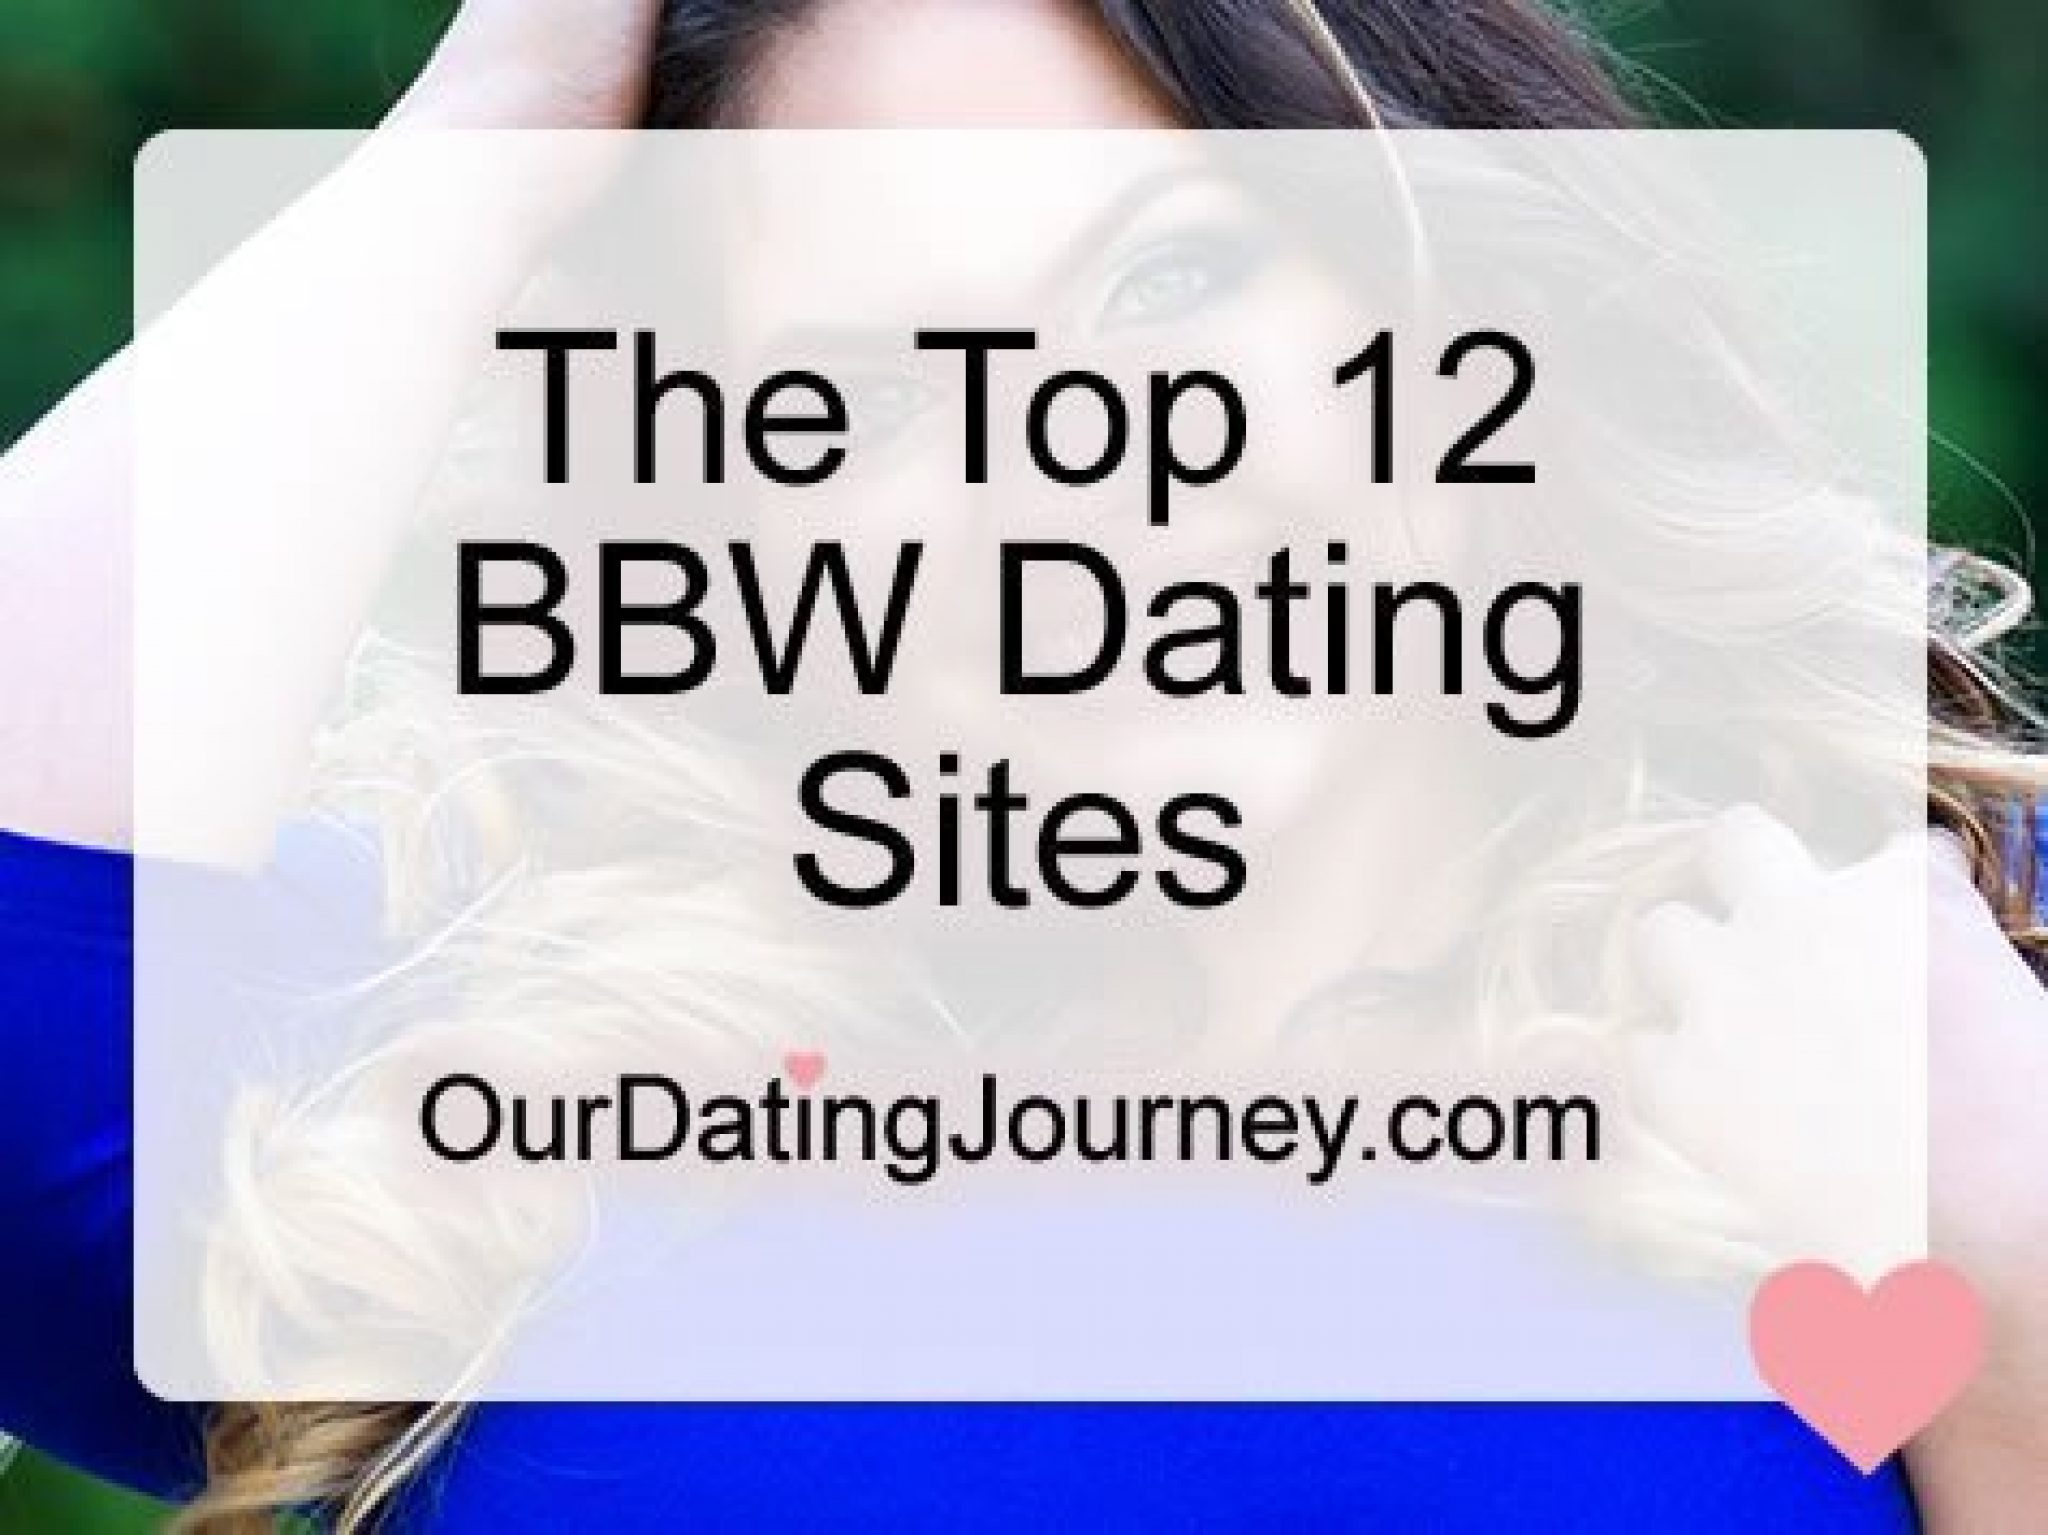 mosty popular bbw dating site